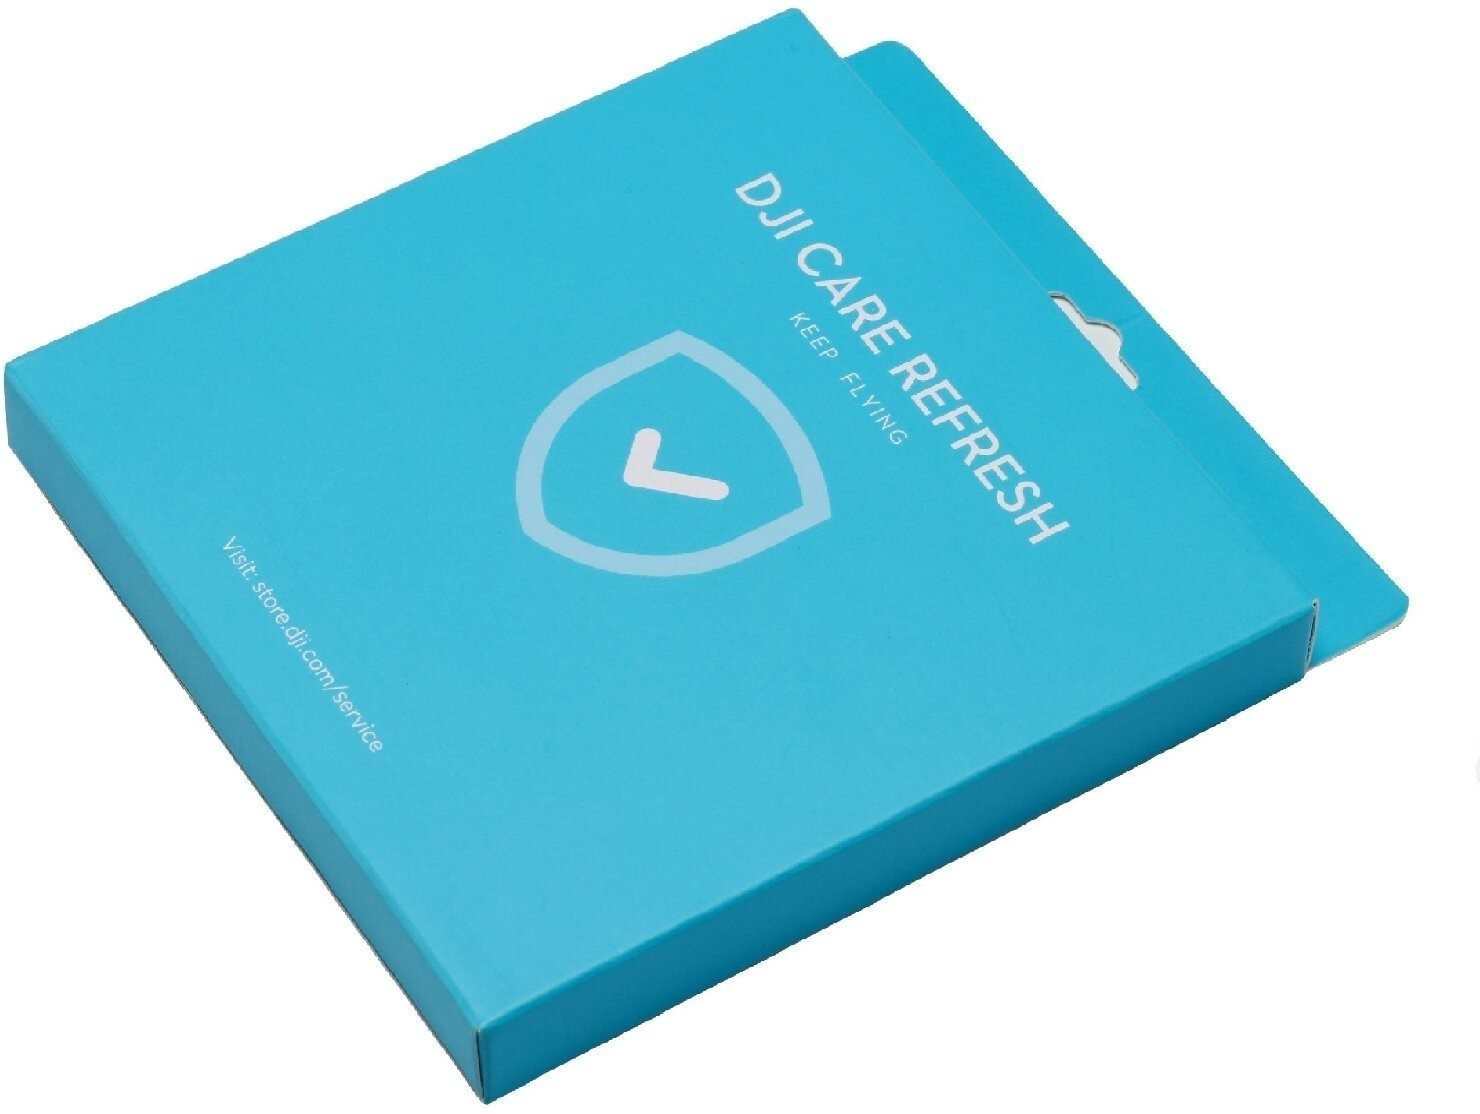 Kiterjesztett garancia Kártya DJI Care Refresh 1 éves terv (DJI Mini 2) EU